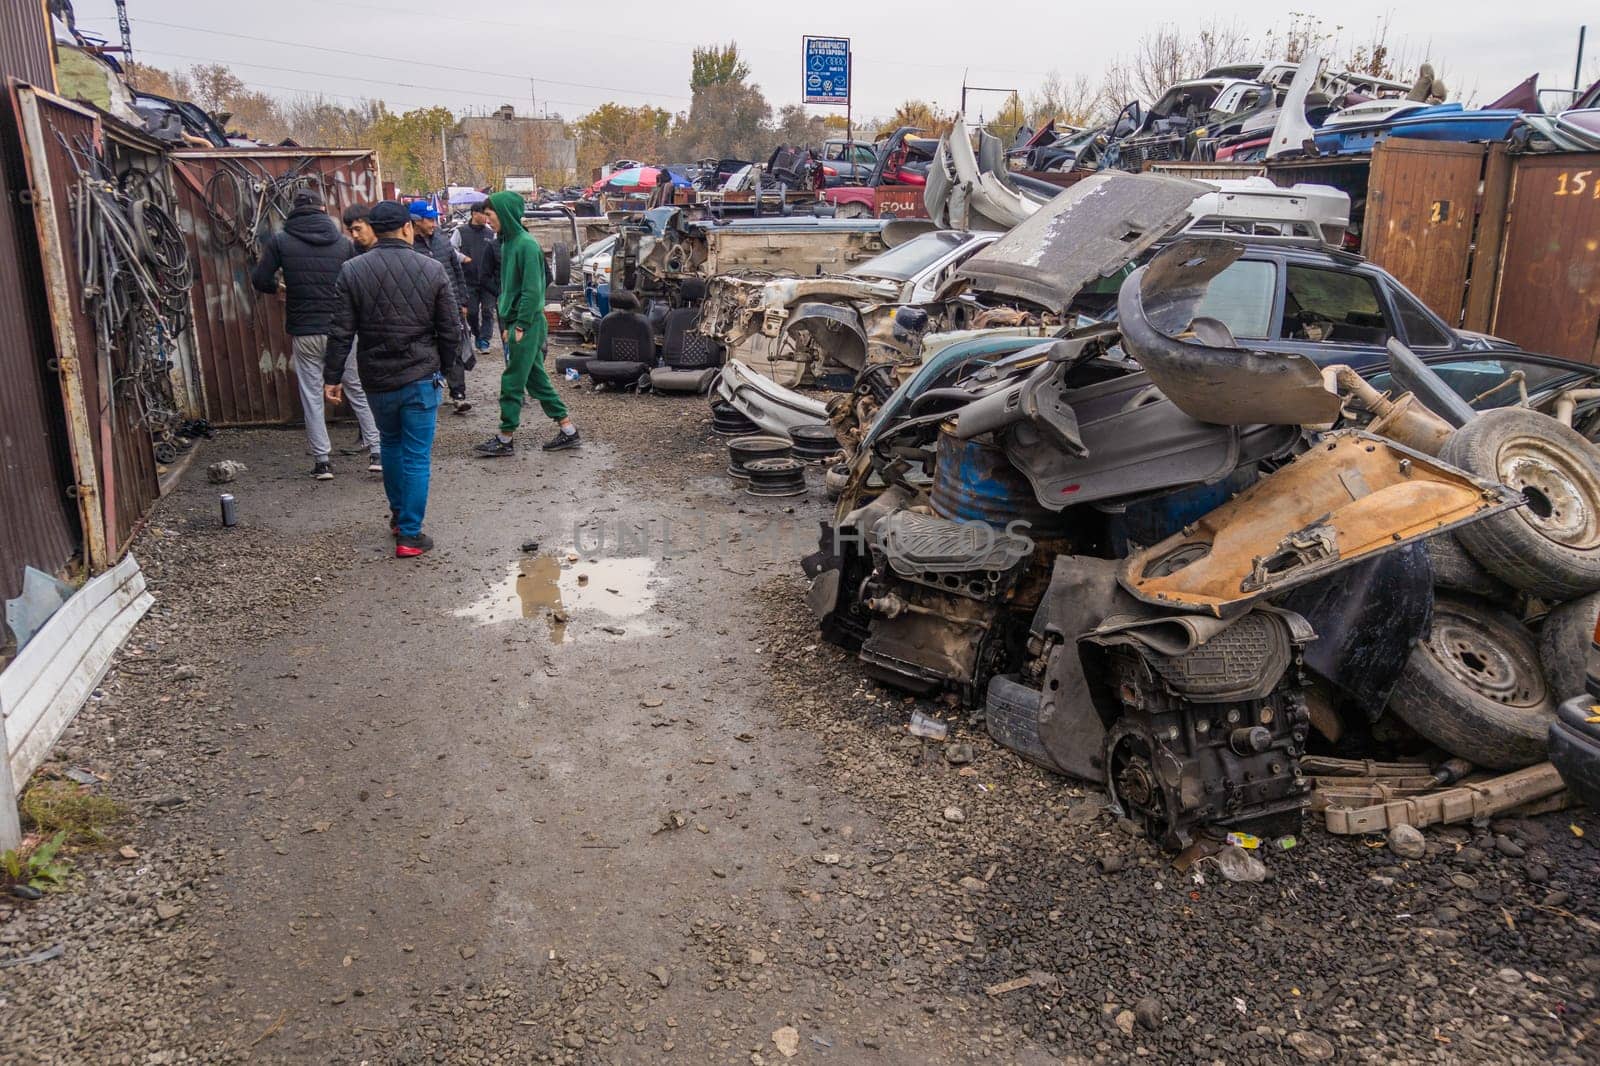 car parts at open air junkyard and used spare parts market in Kudaybergen, Bishkek, Kyrgyzstan - October 10, 2022